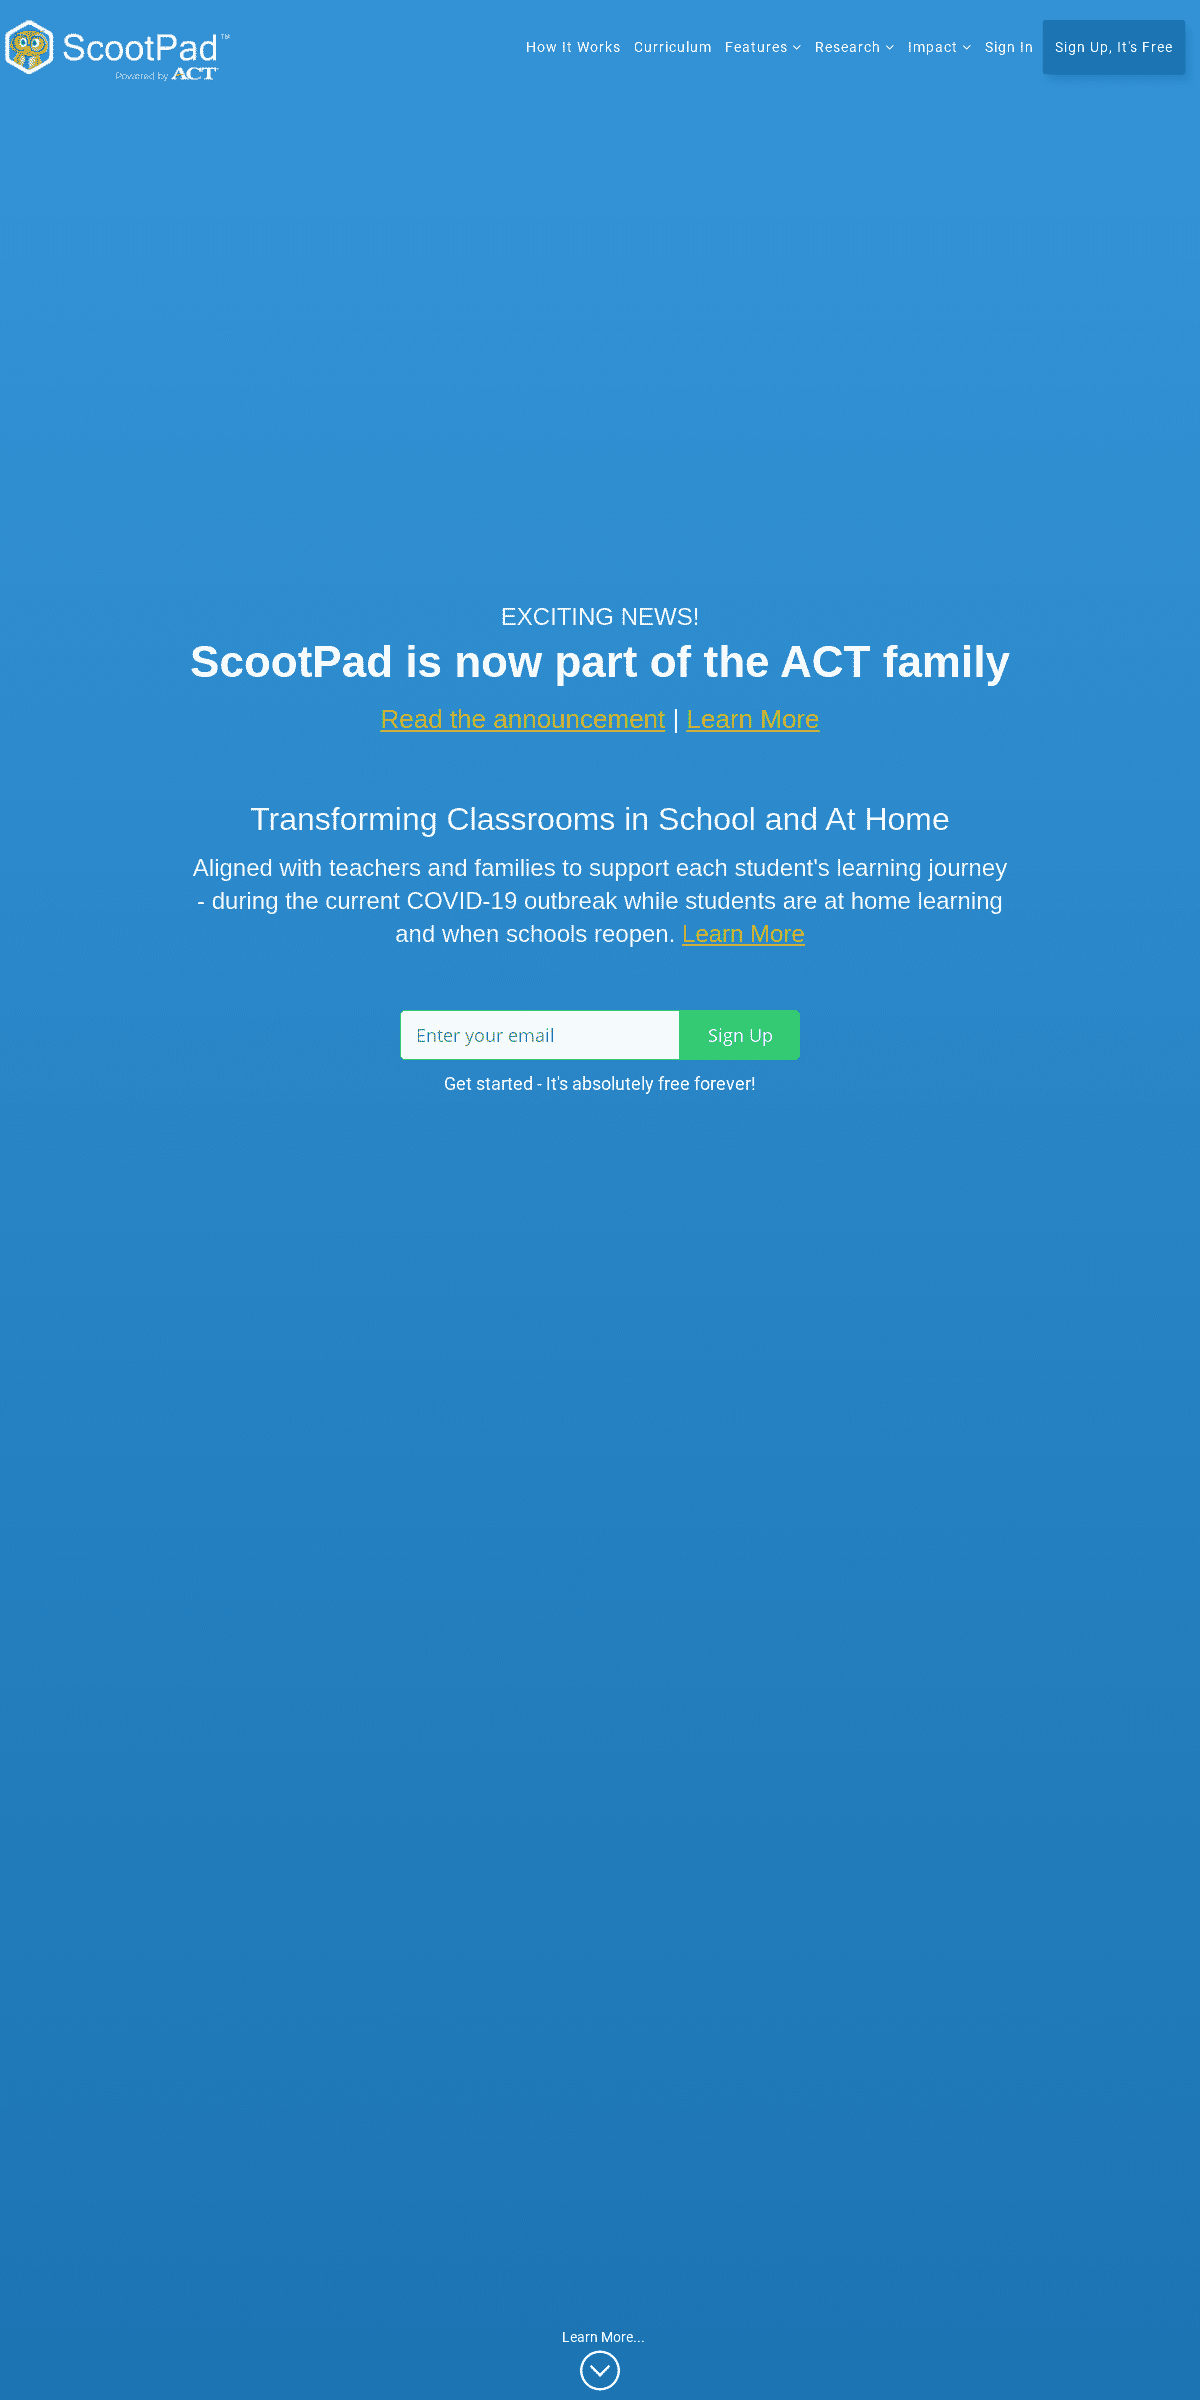 A complete backup of scootpad.com